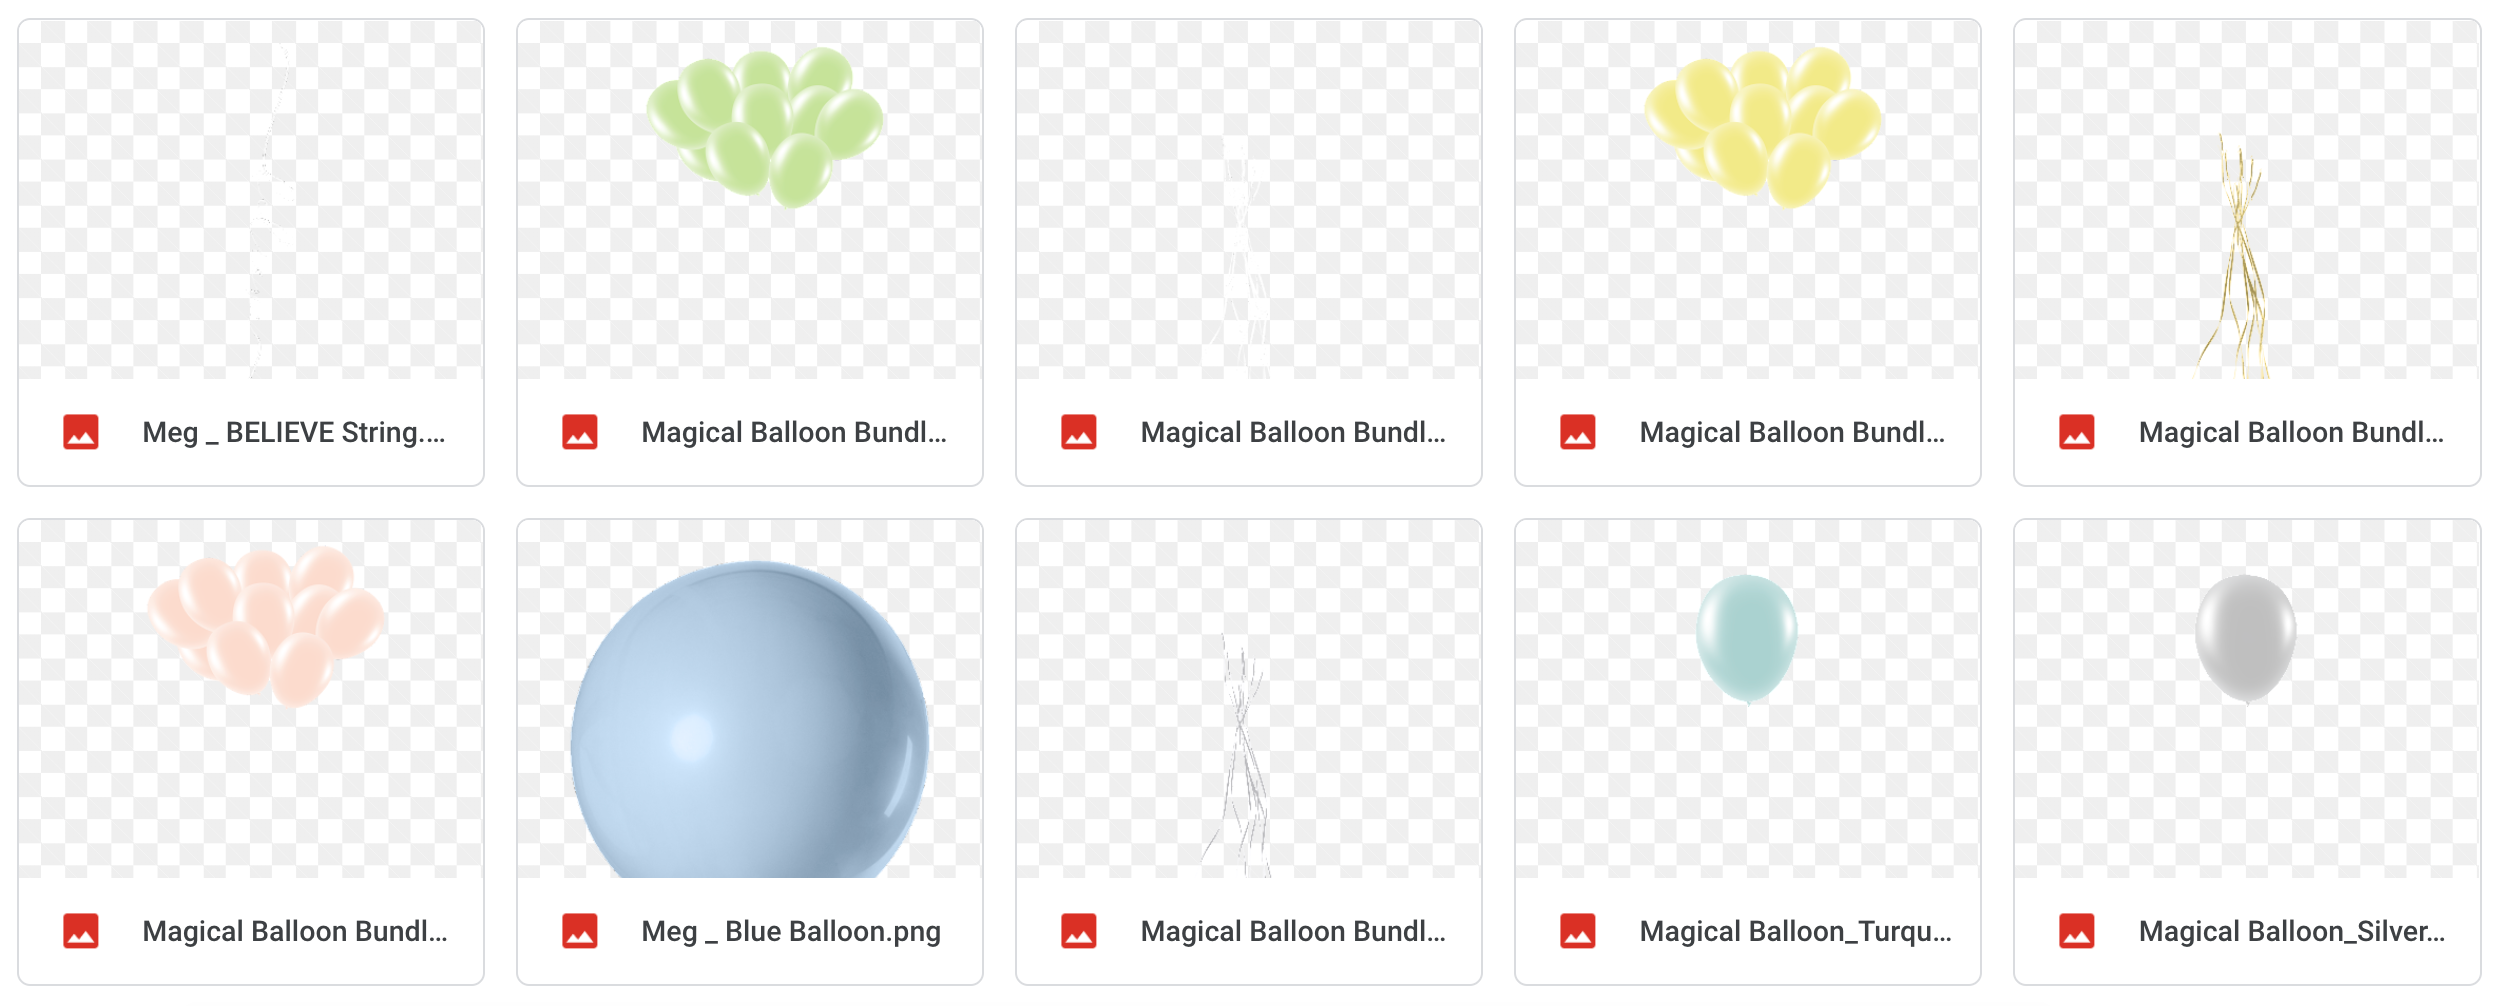 Magical Balloons - Meg Bitton Productions